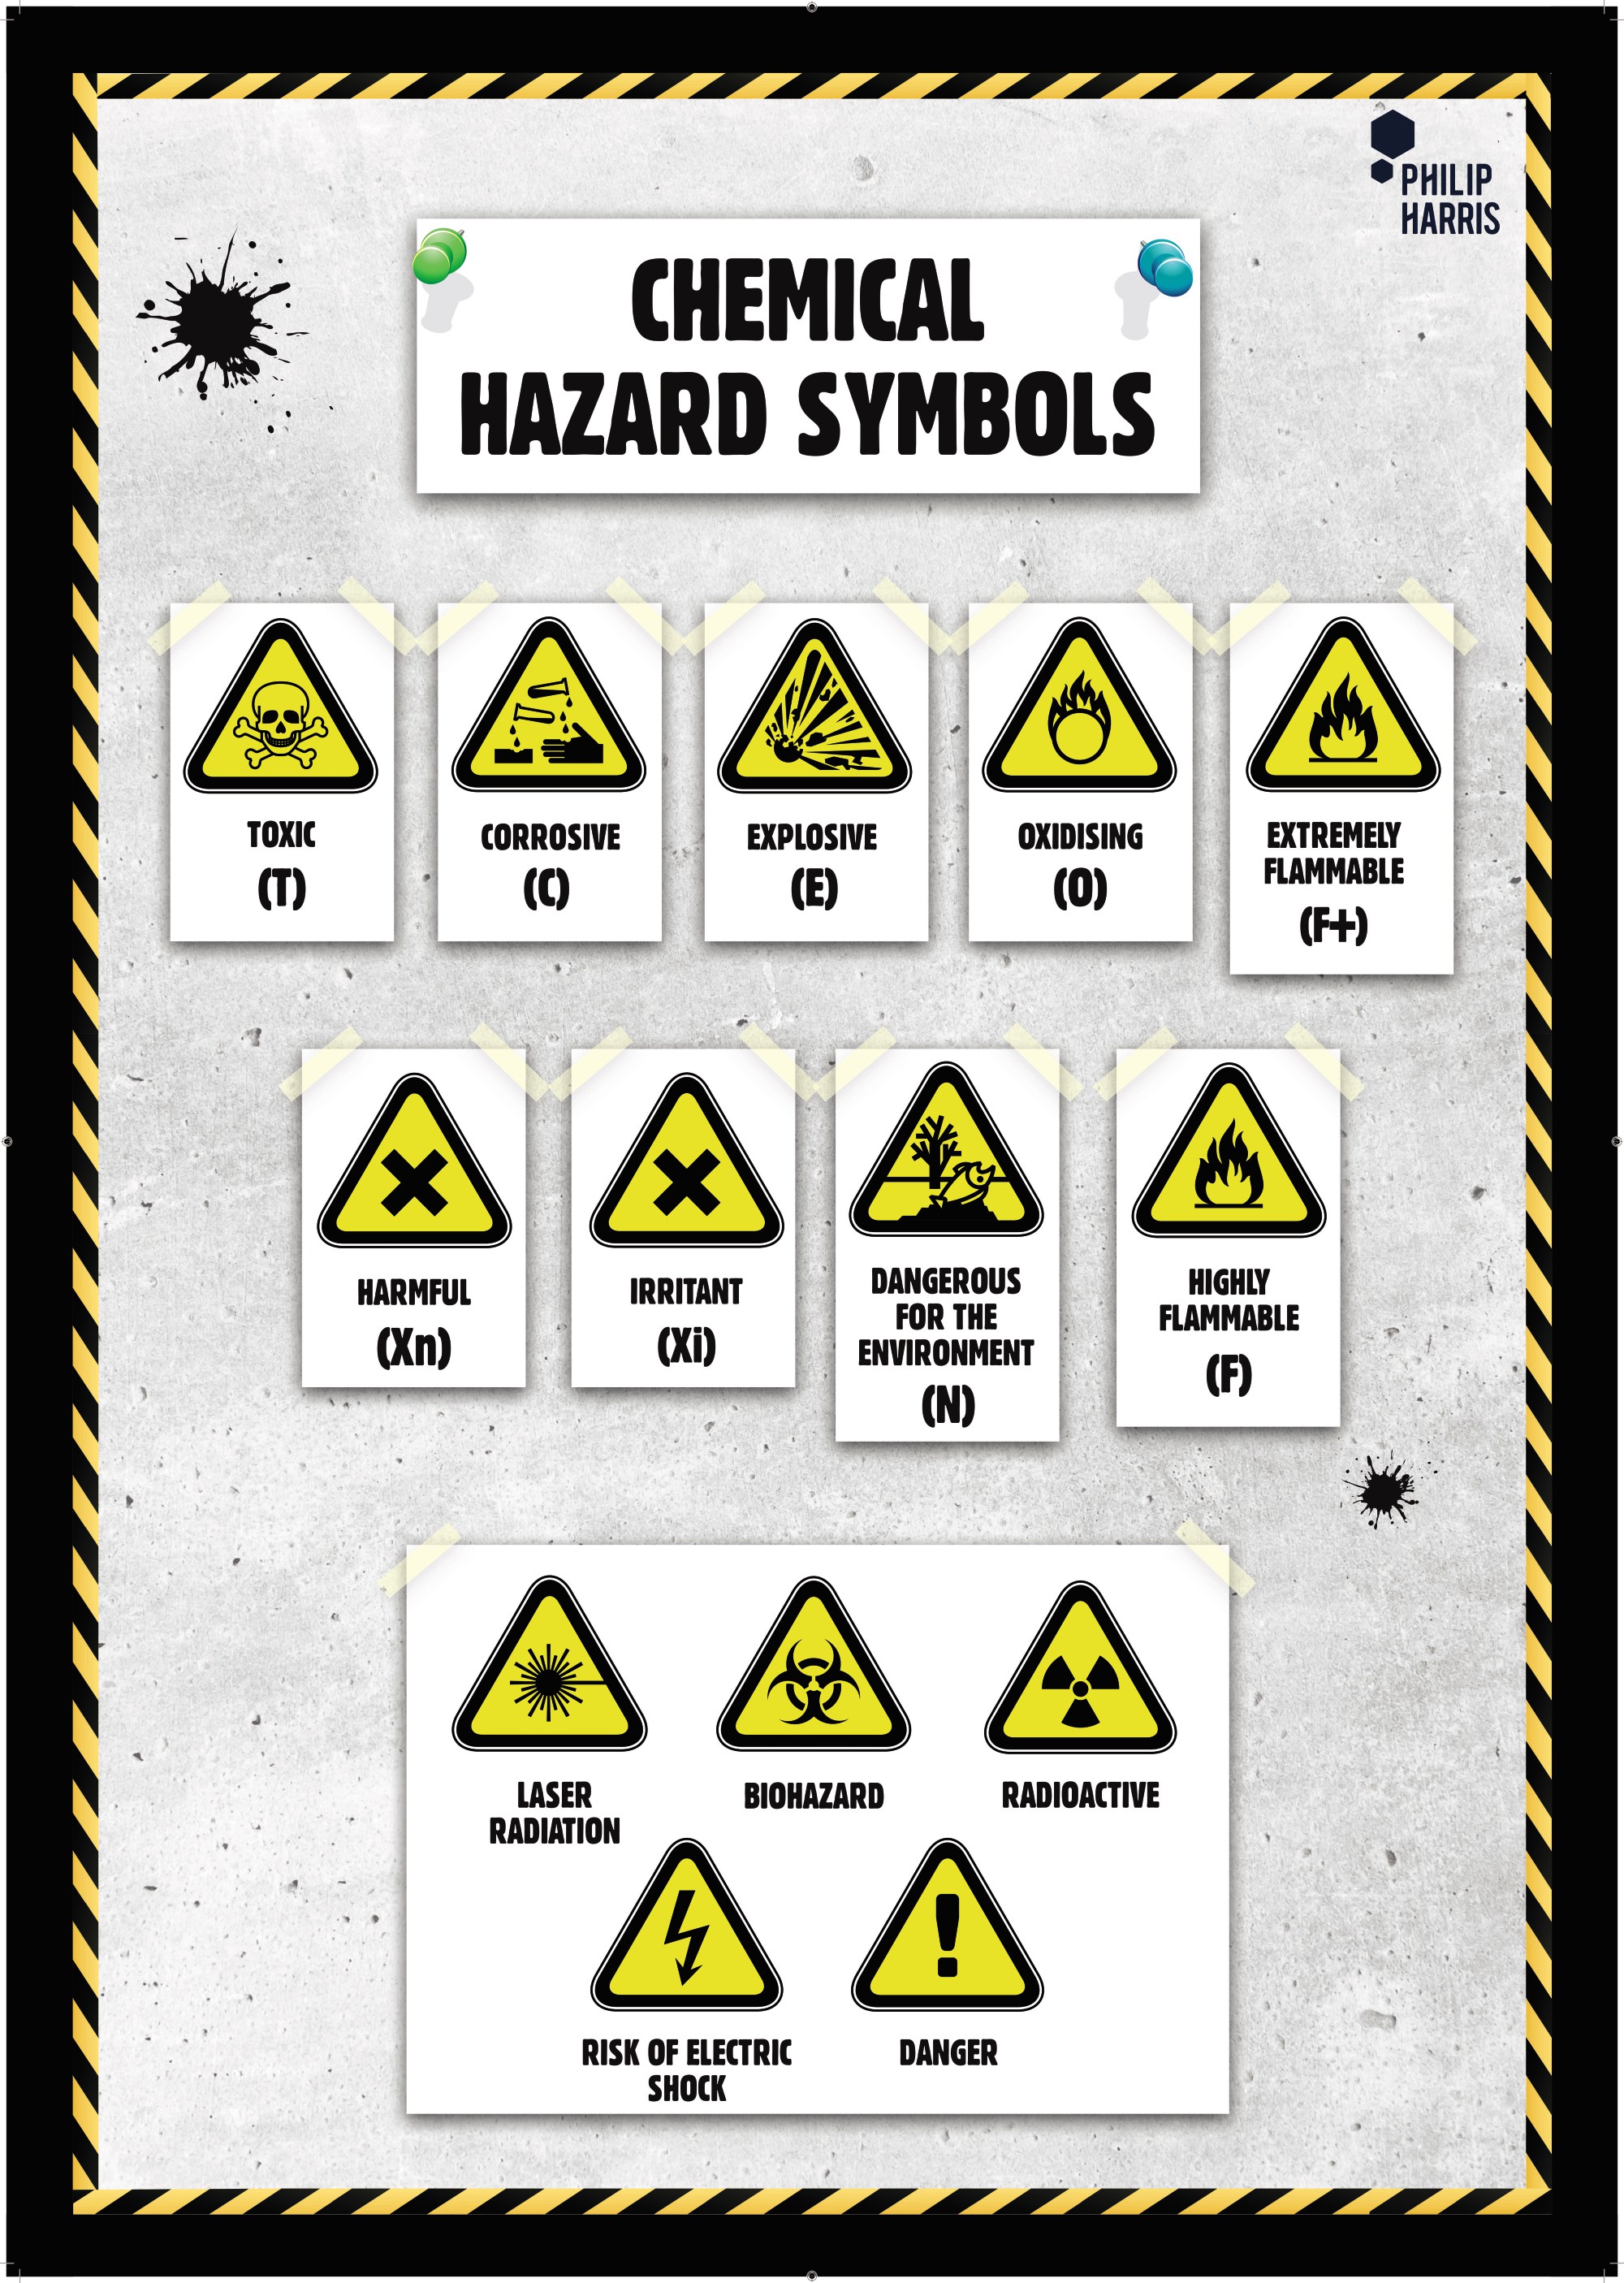 G Philip Harris Chemical Hazard Symbols Poster Gls